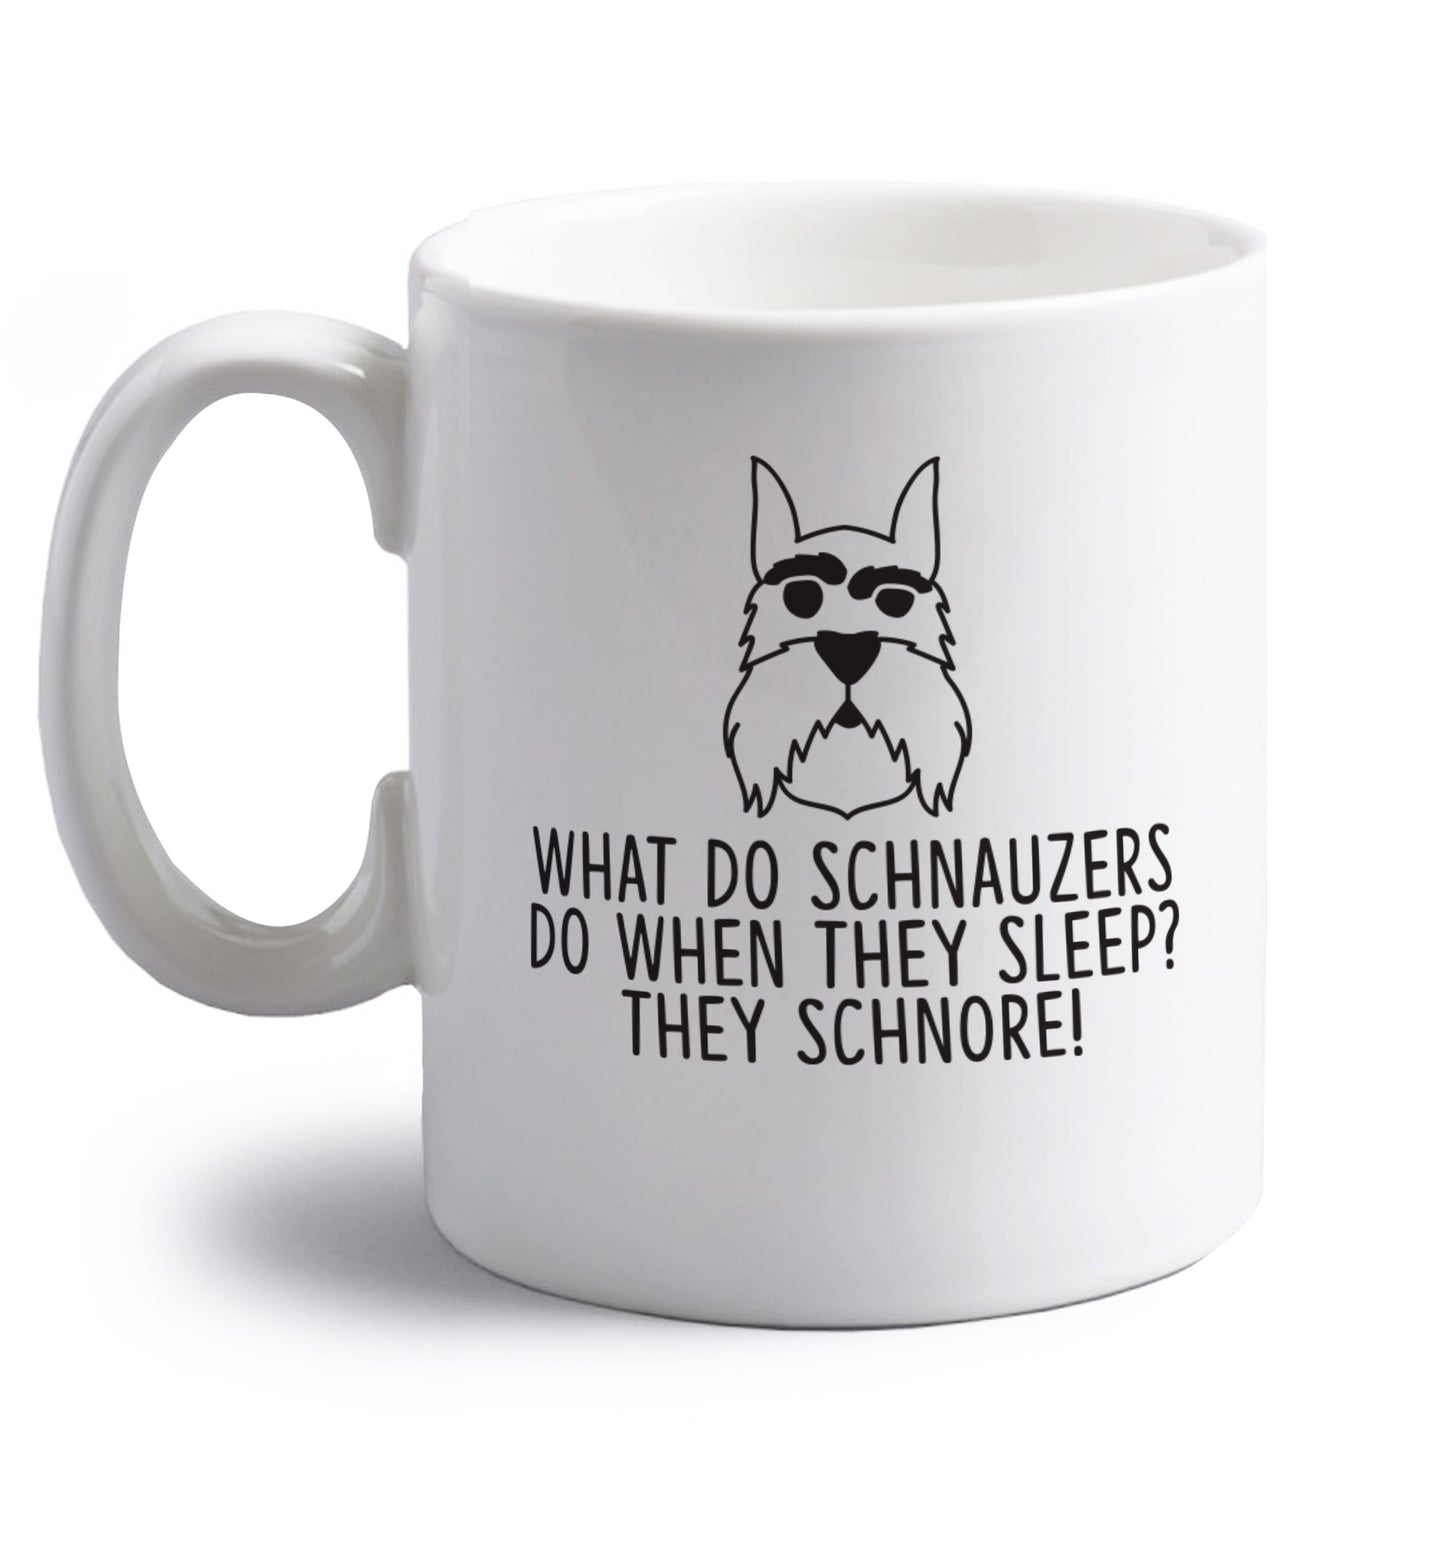 What do schnauzers do when they sleep? Schnore! right handed white ceramic mug 